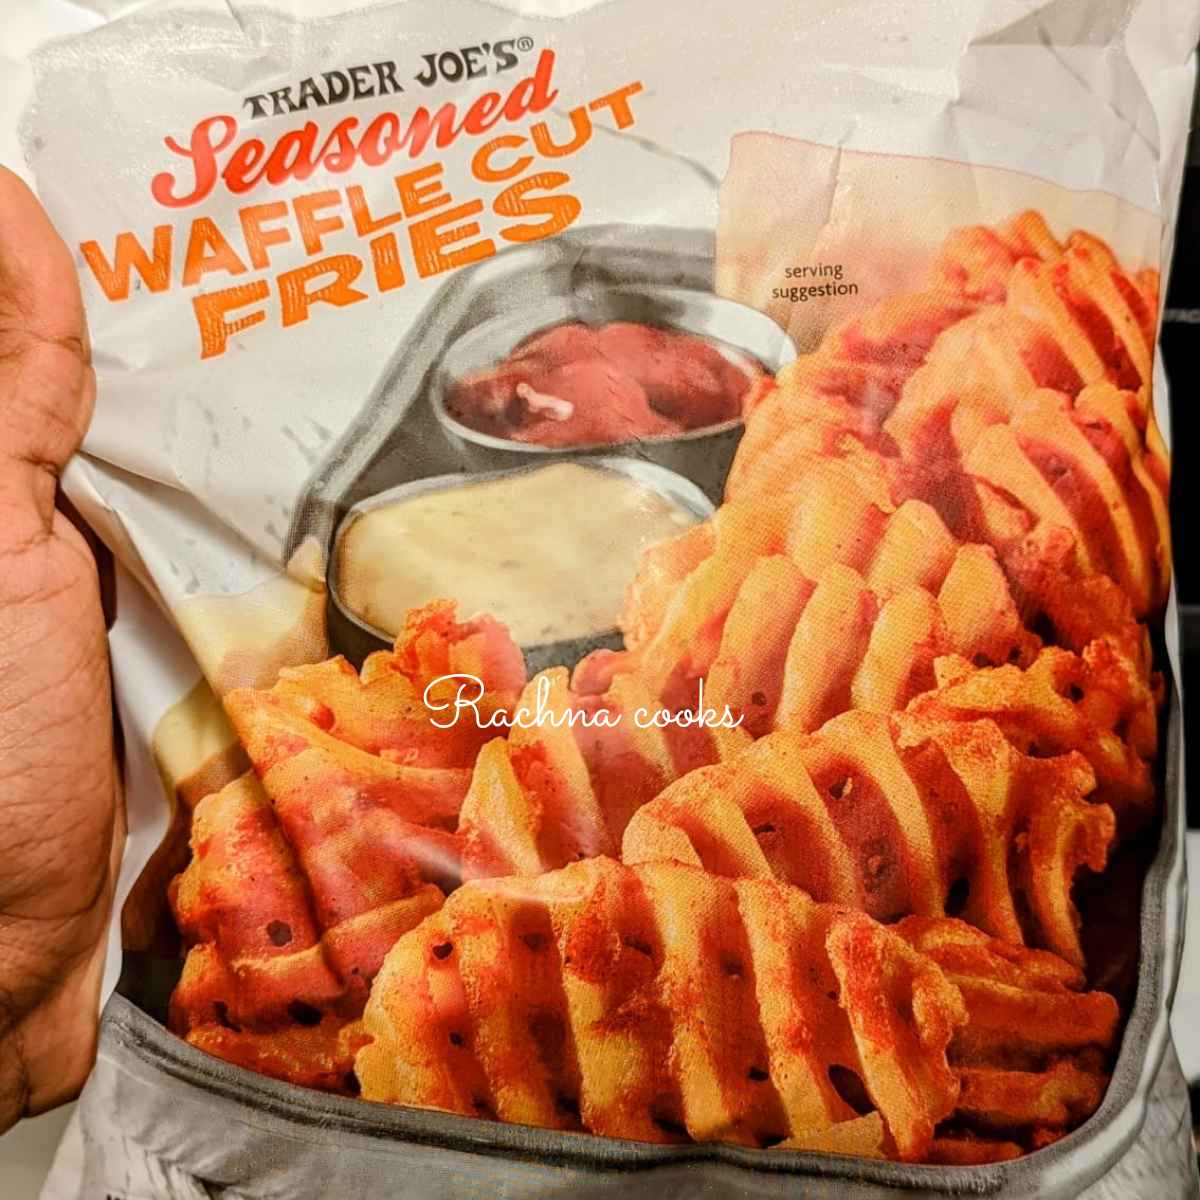 Trader Joe's frozen waffle fries